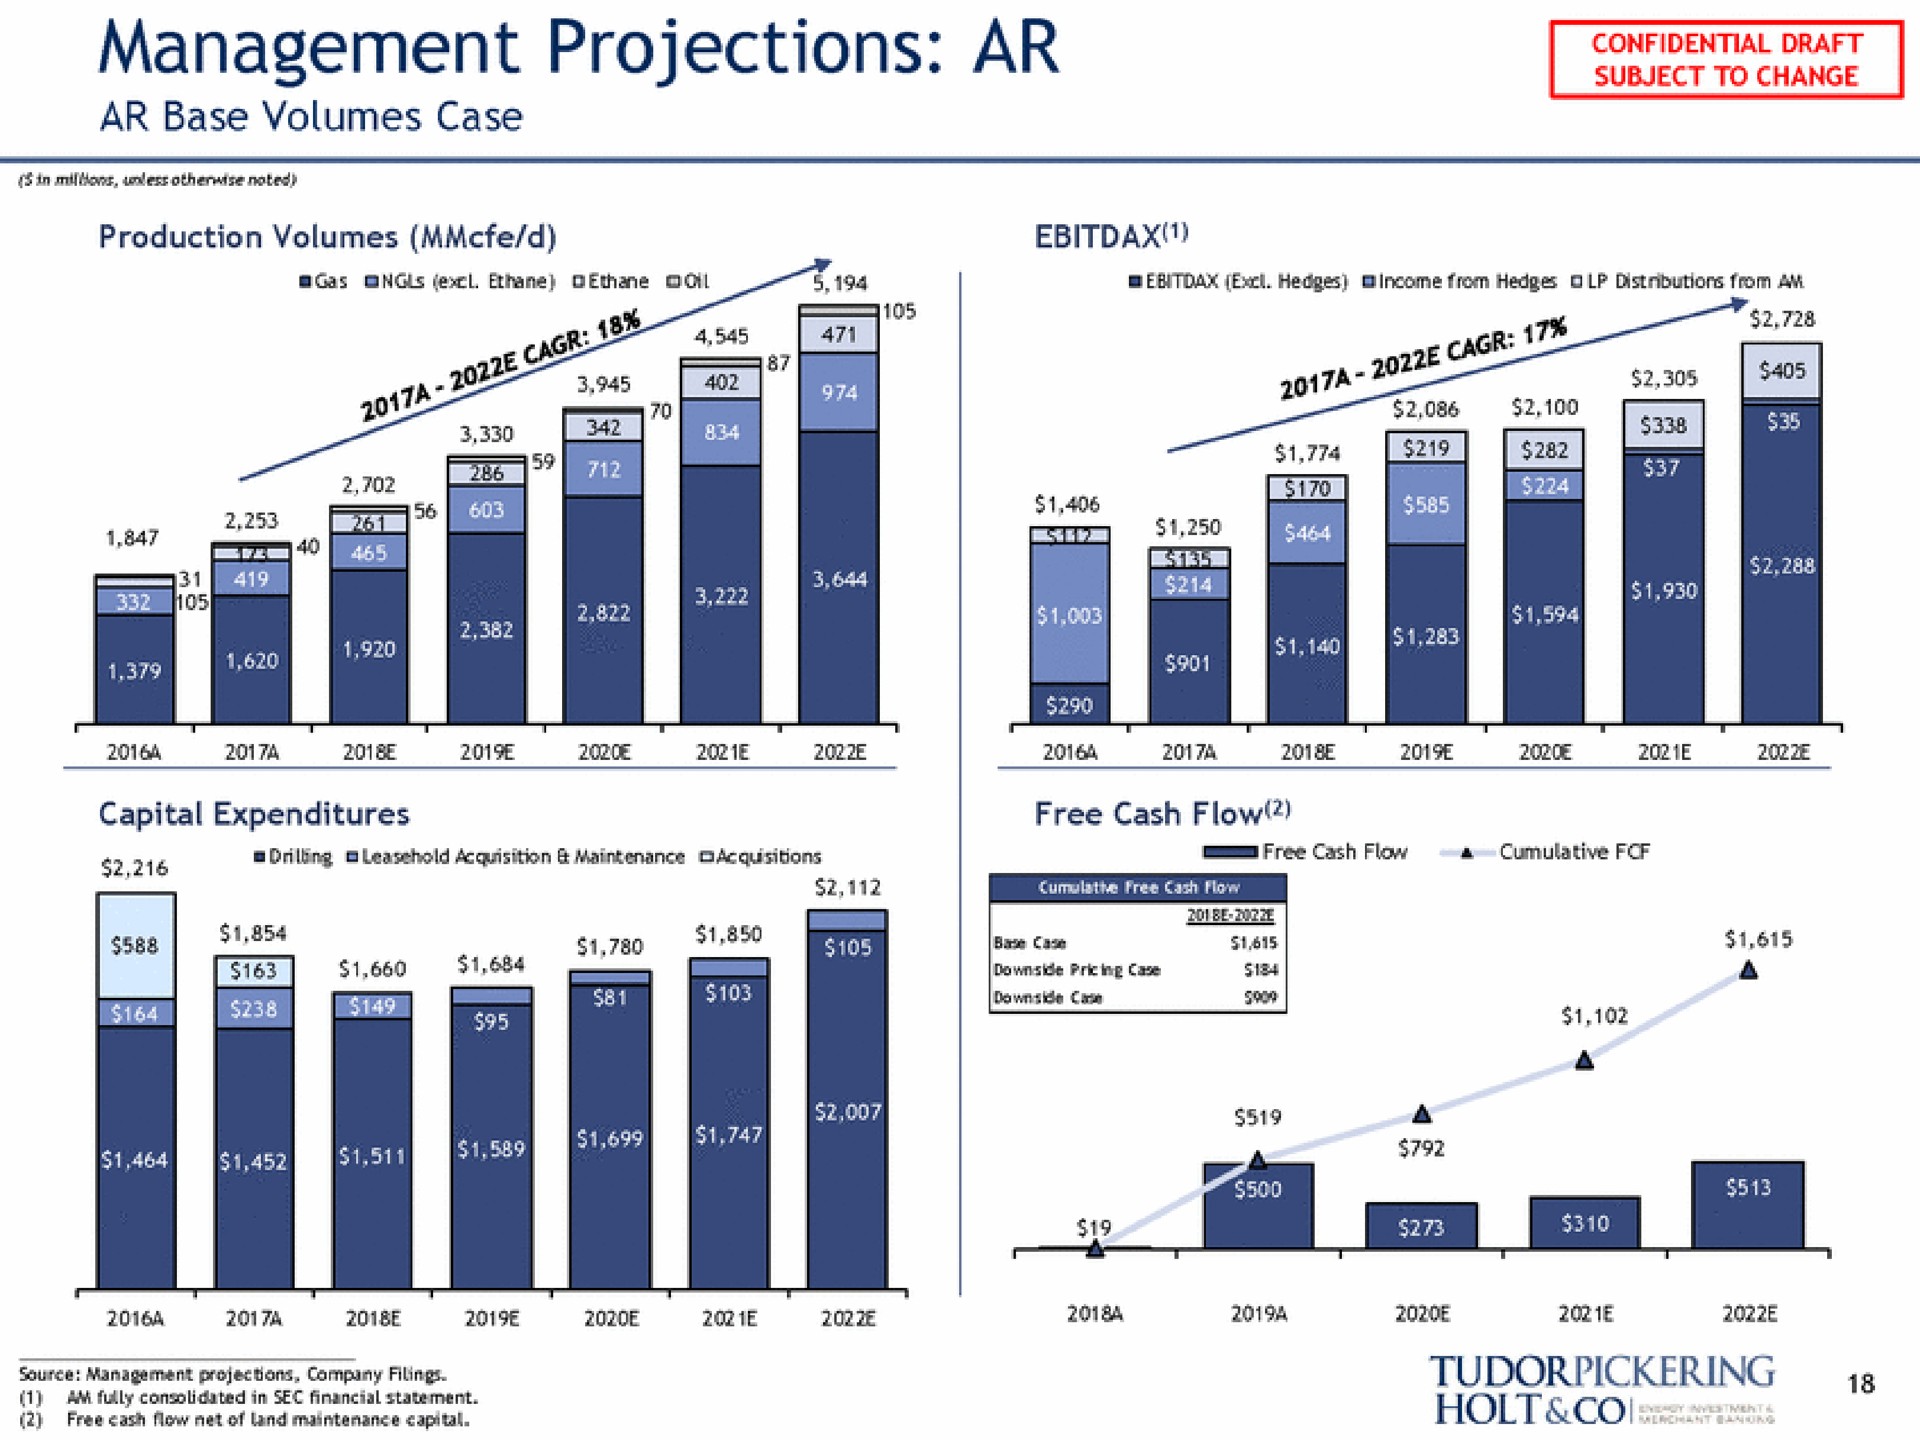 management projections | Tudor, Pickering, Holt & Co